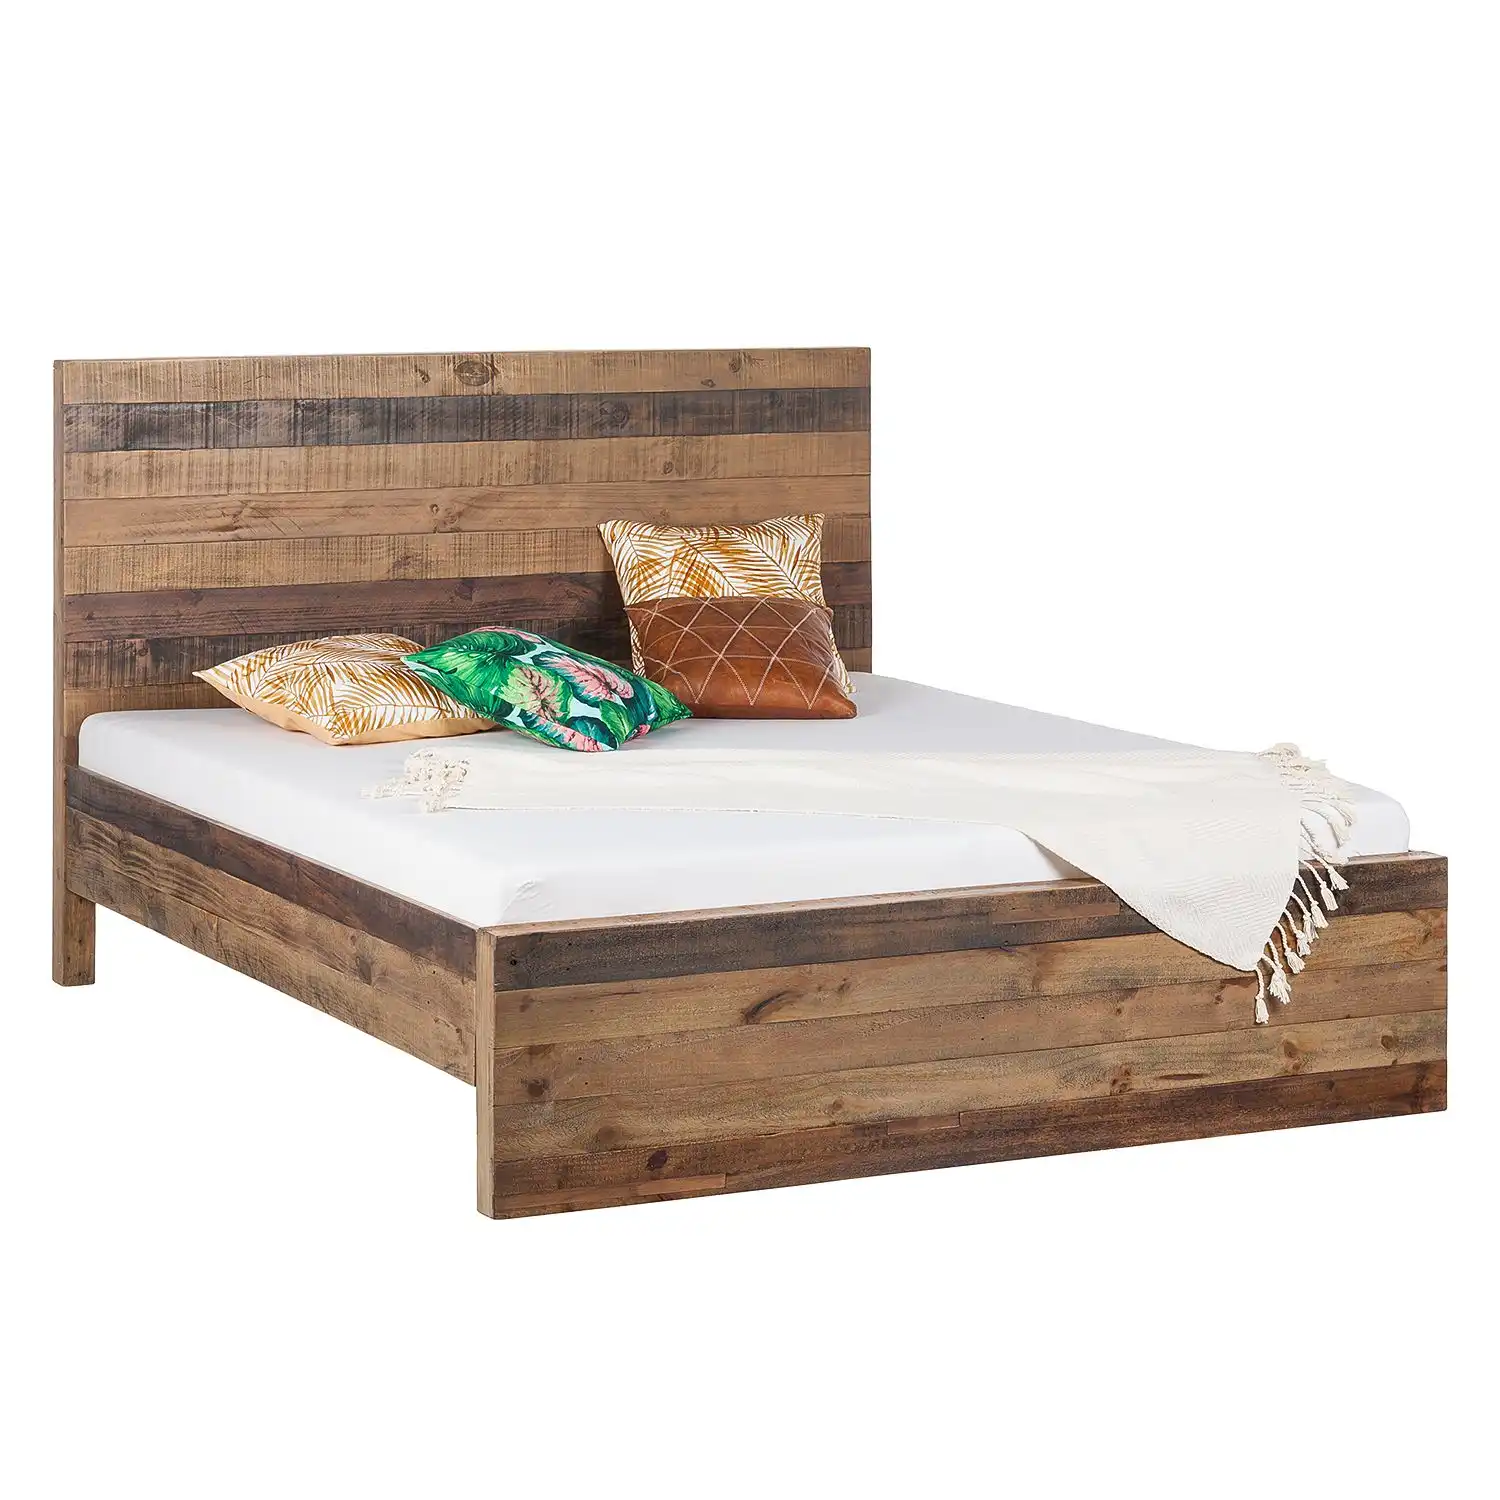 Reclaimed Wood Bed (Knock Down) - popular handicrafts